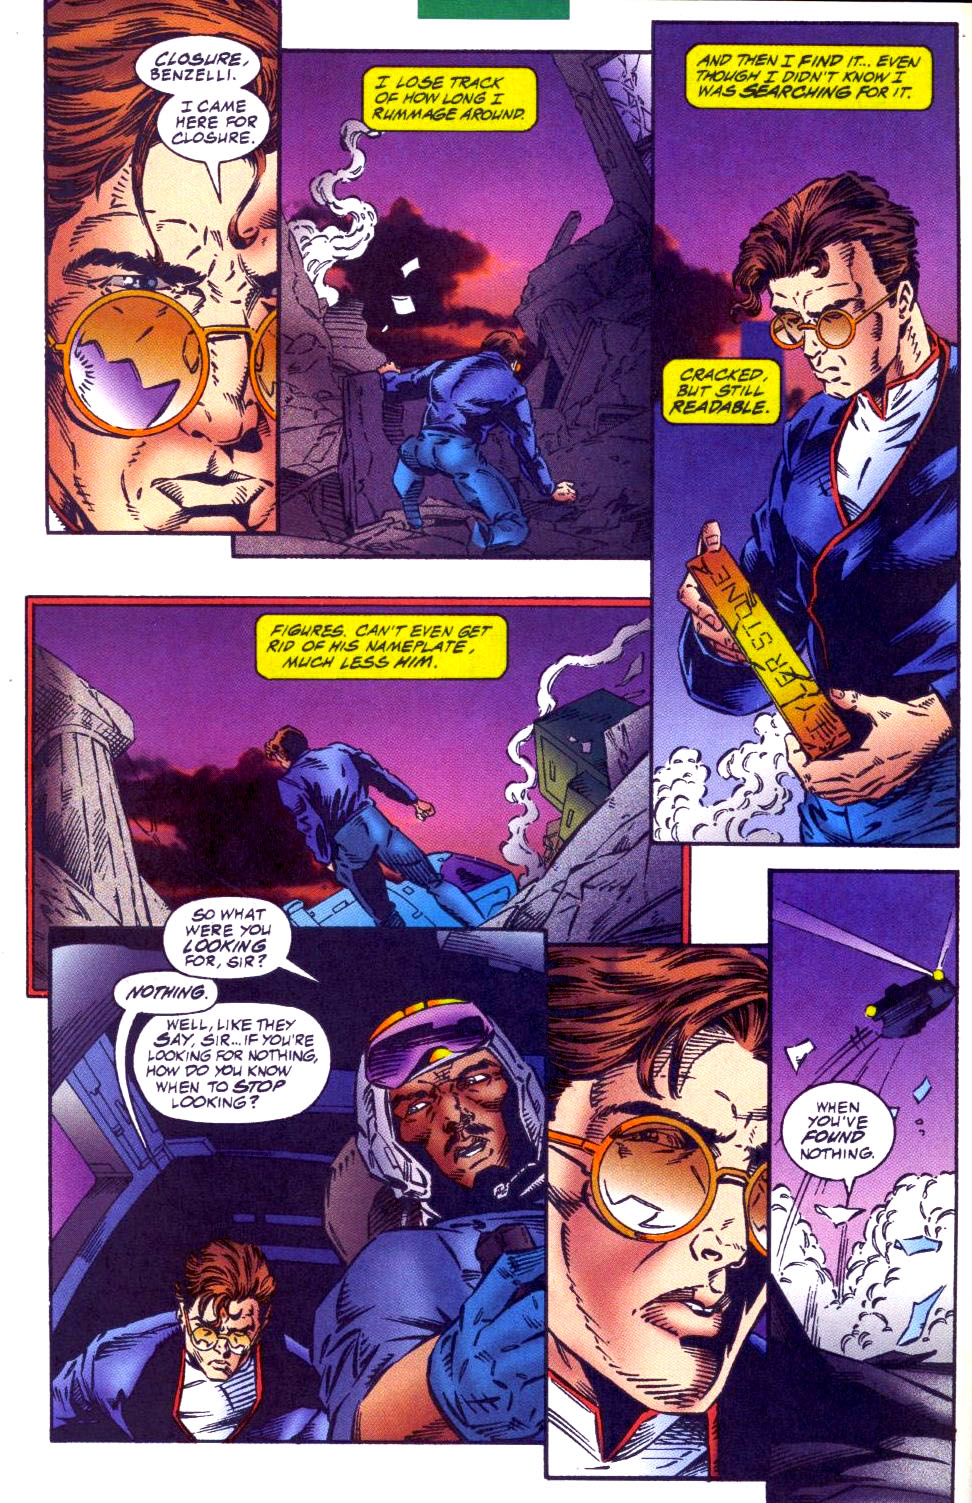 Spider-Man 2099 (1992) issue 41 - Page 5